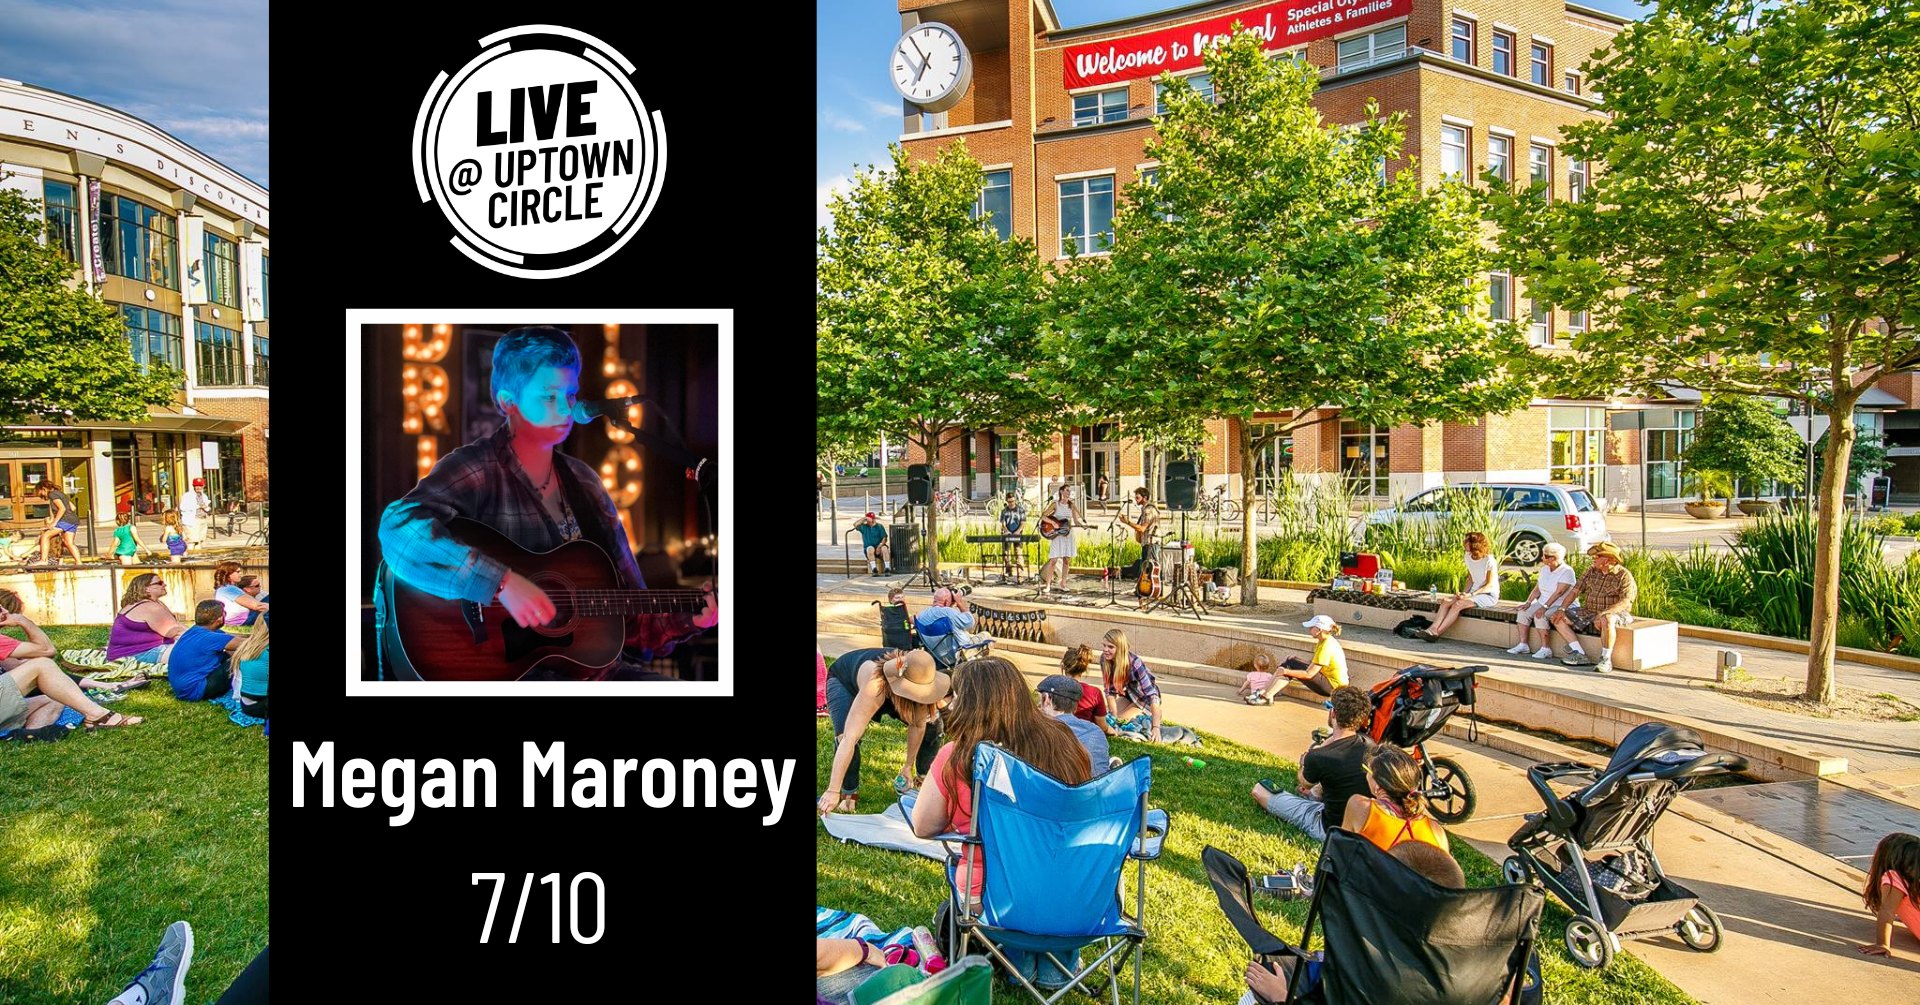 Normal LIVE presents Megan Maroney @ Uptown Circle